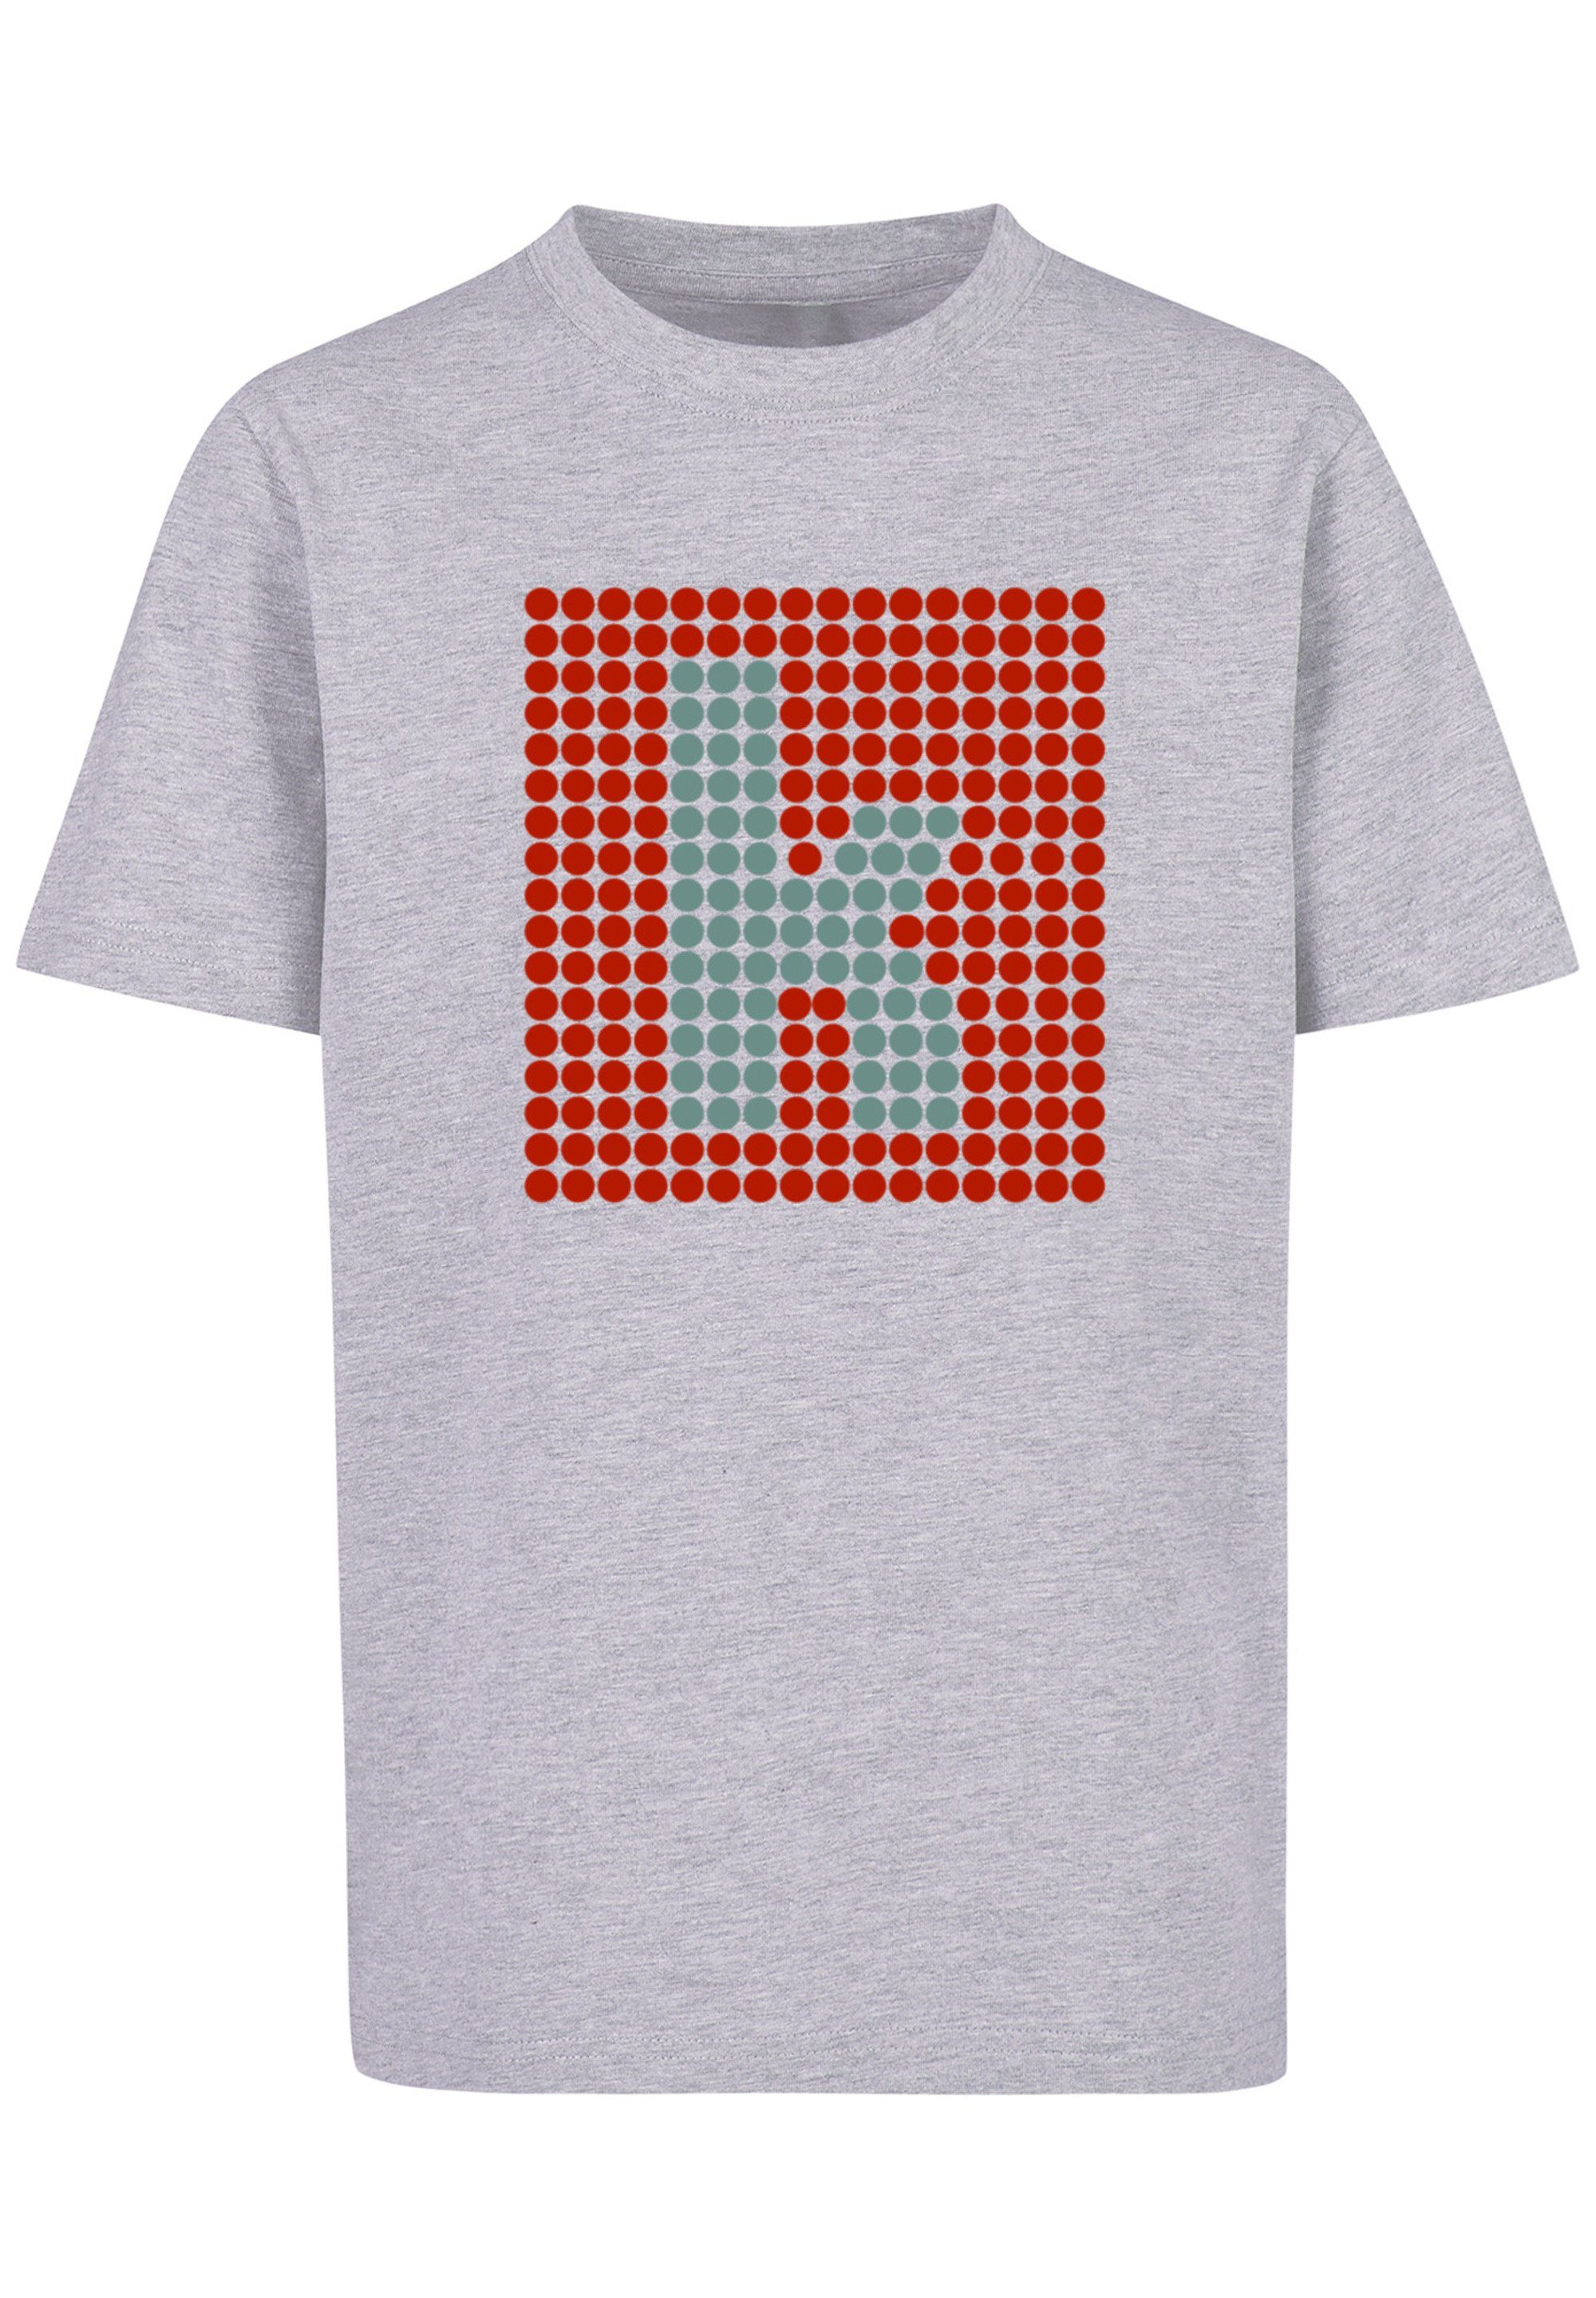 Black K Killers The Band grey T-Shirt F4NT4STIC heather Glow Rock Print